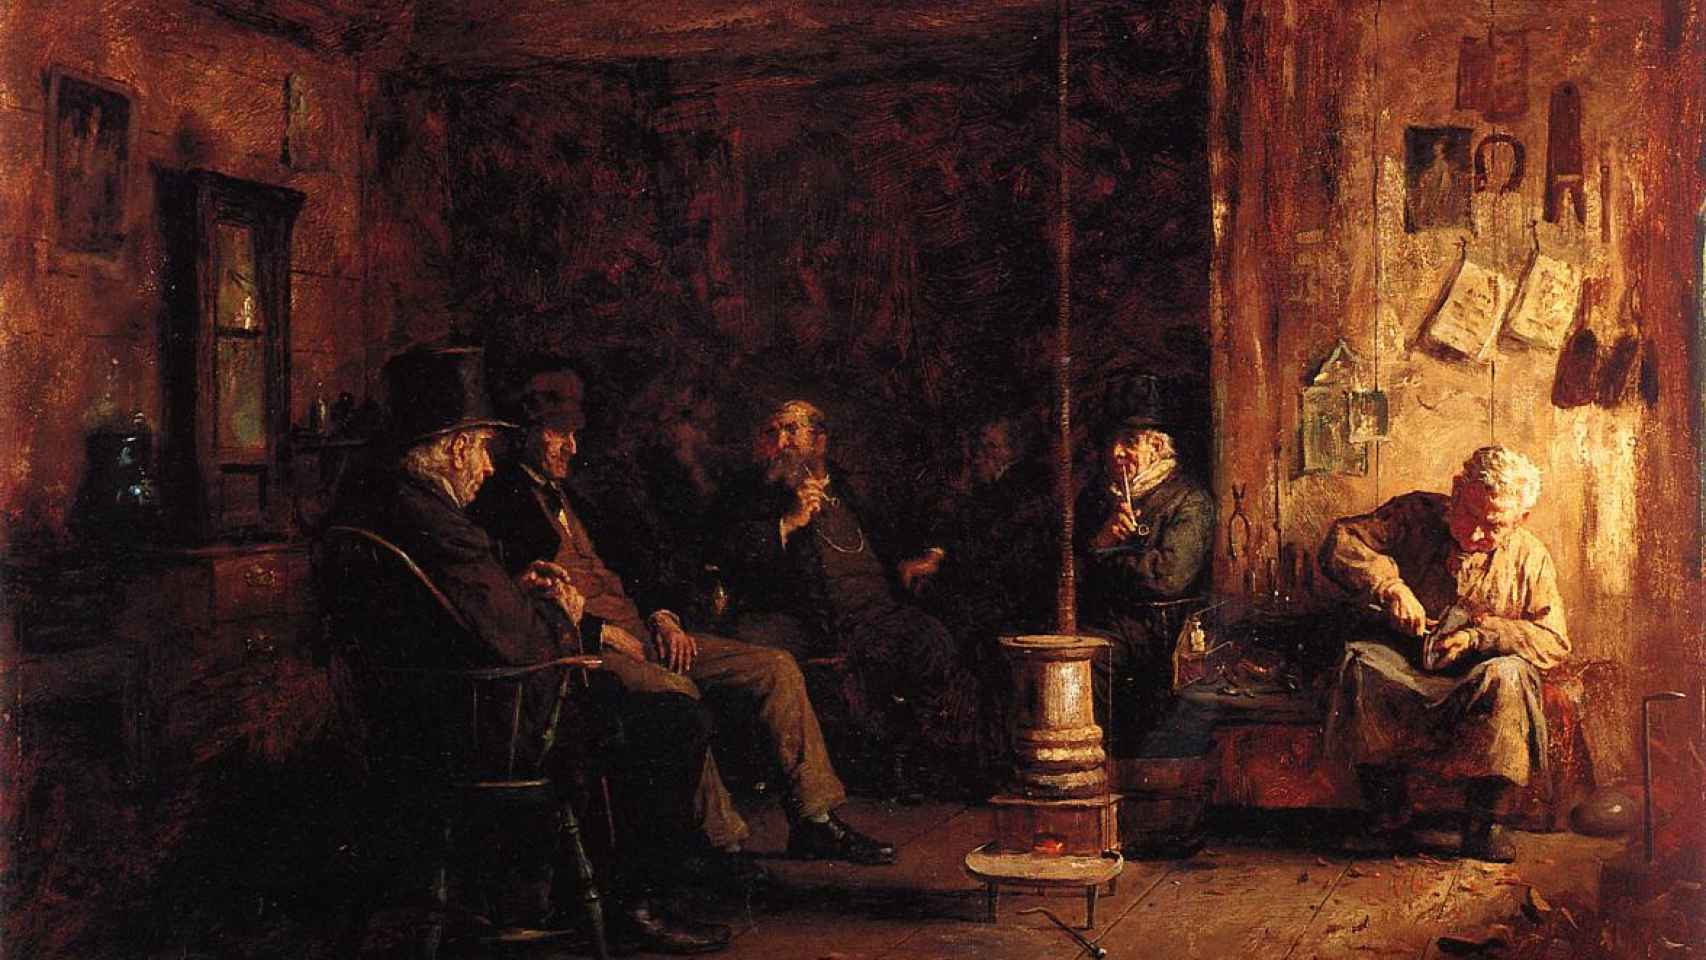 'The Nantucket School of Philosophy' (1887) obra del pintor Eastman Johnson